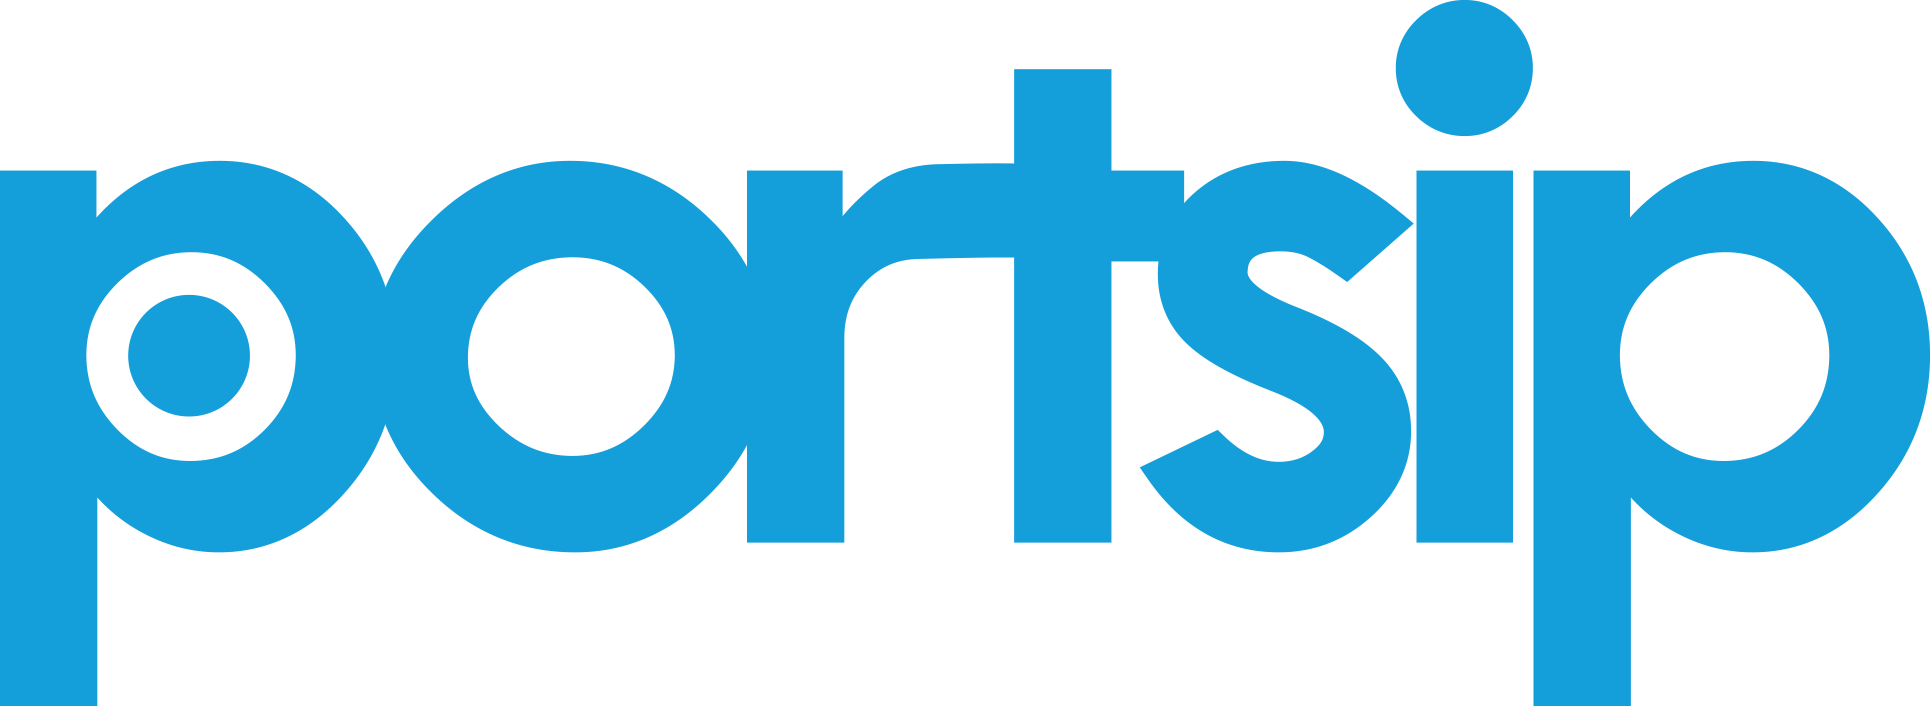 PortSIP Logo